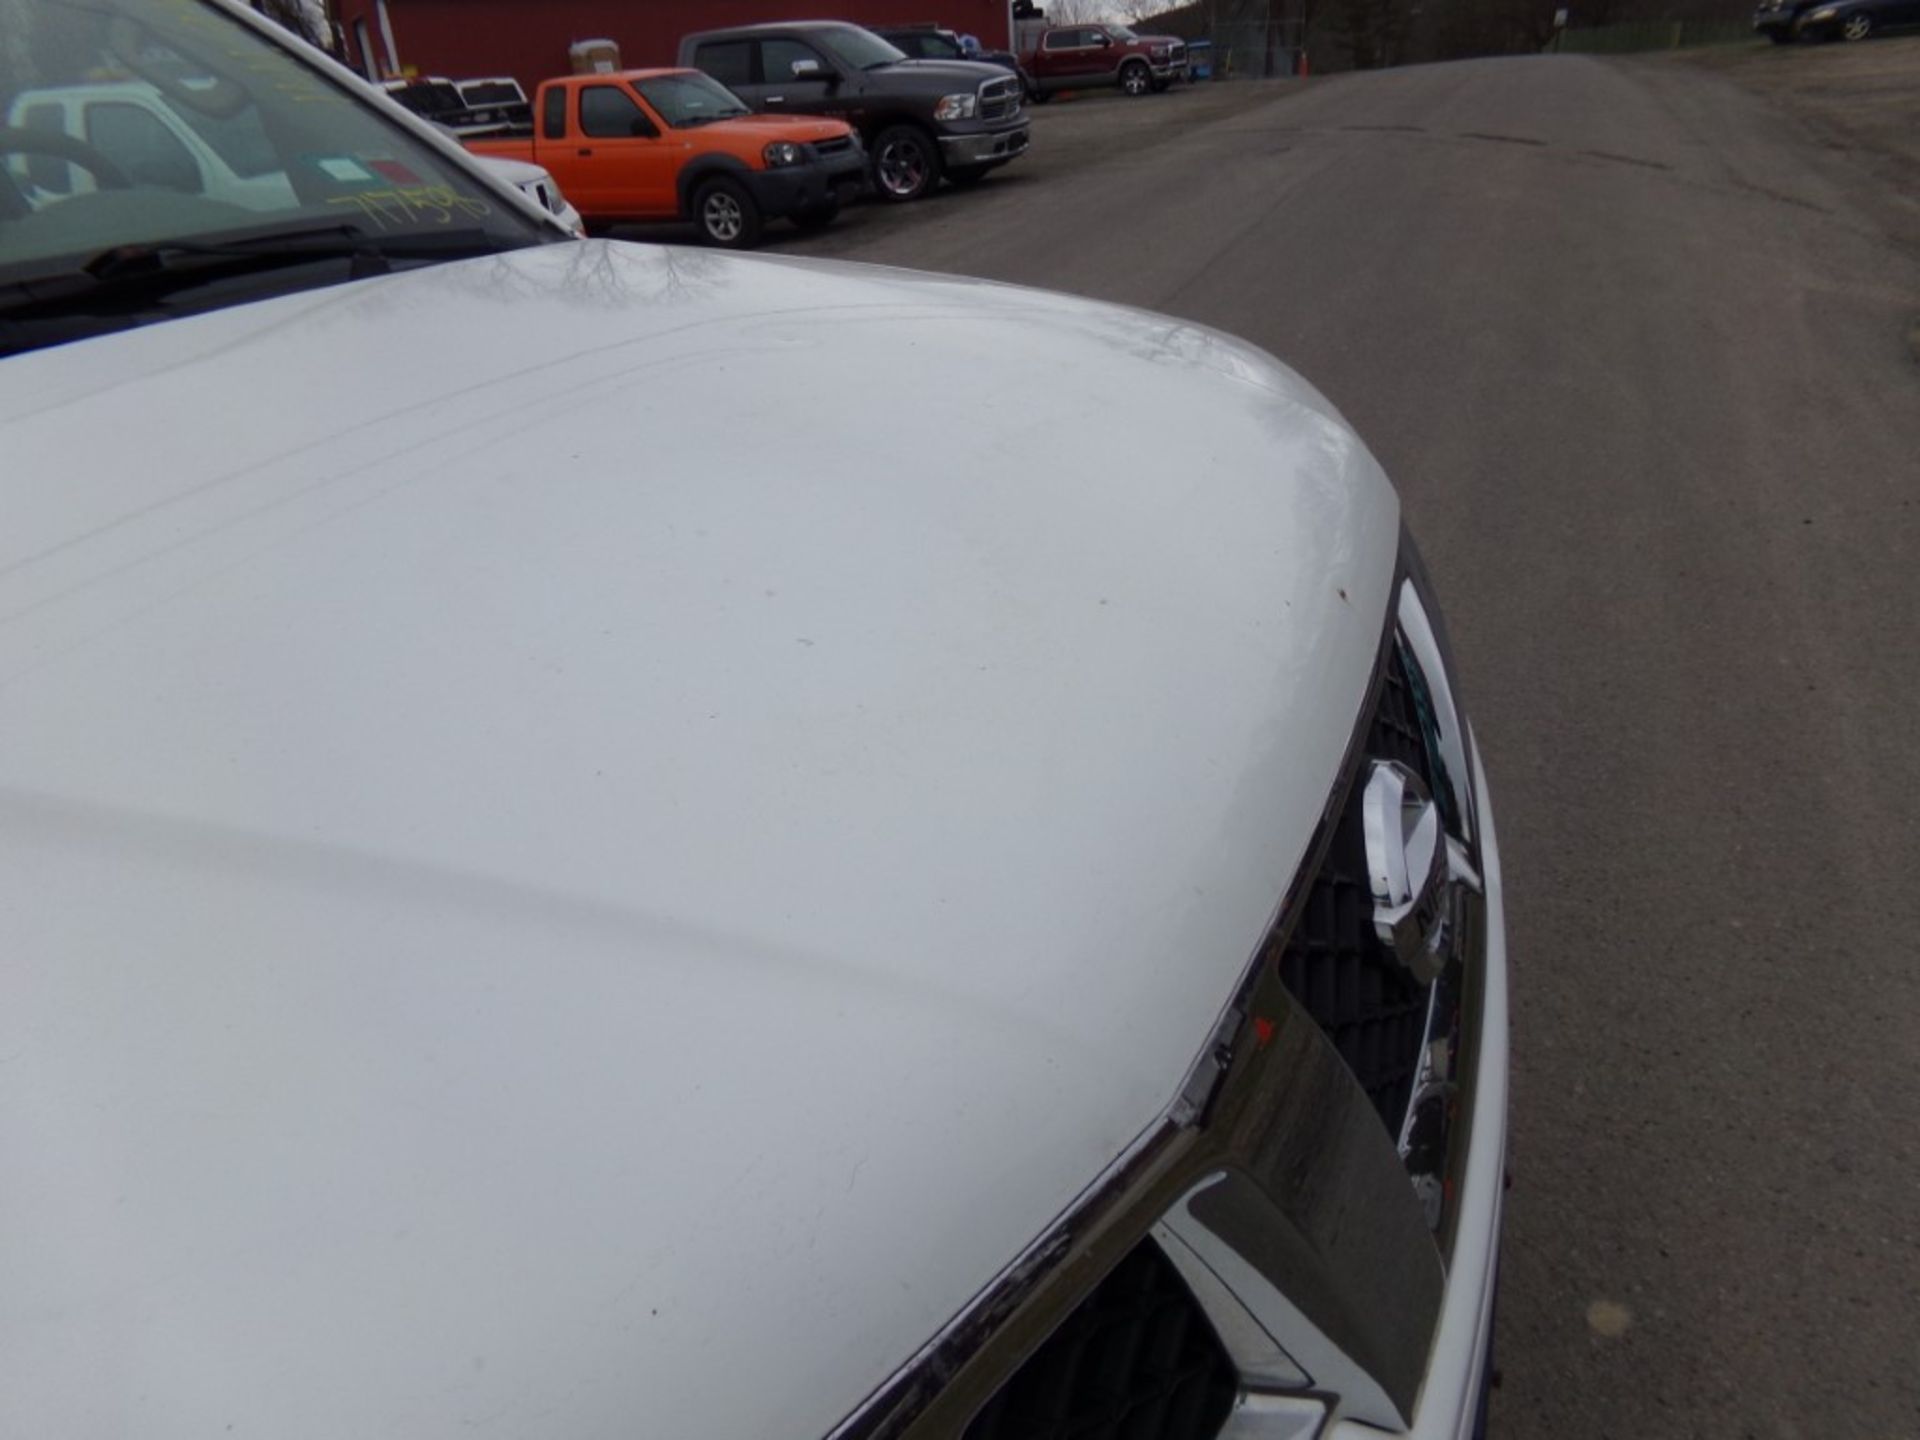 2015 Nissan Frontier SV 4 x 4 Ext. Cab, White, 141,947 Miles, Hard Fiberglass Toneau Cover, Orange - Image 10 of 10